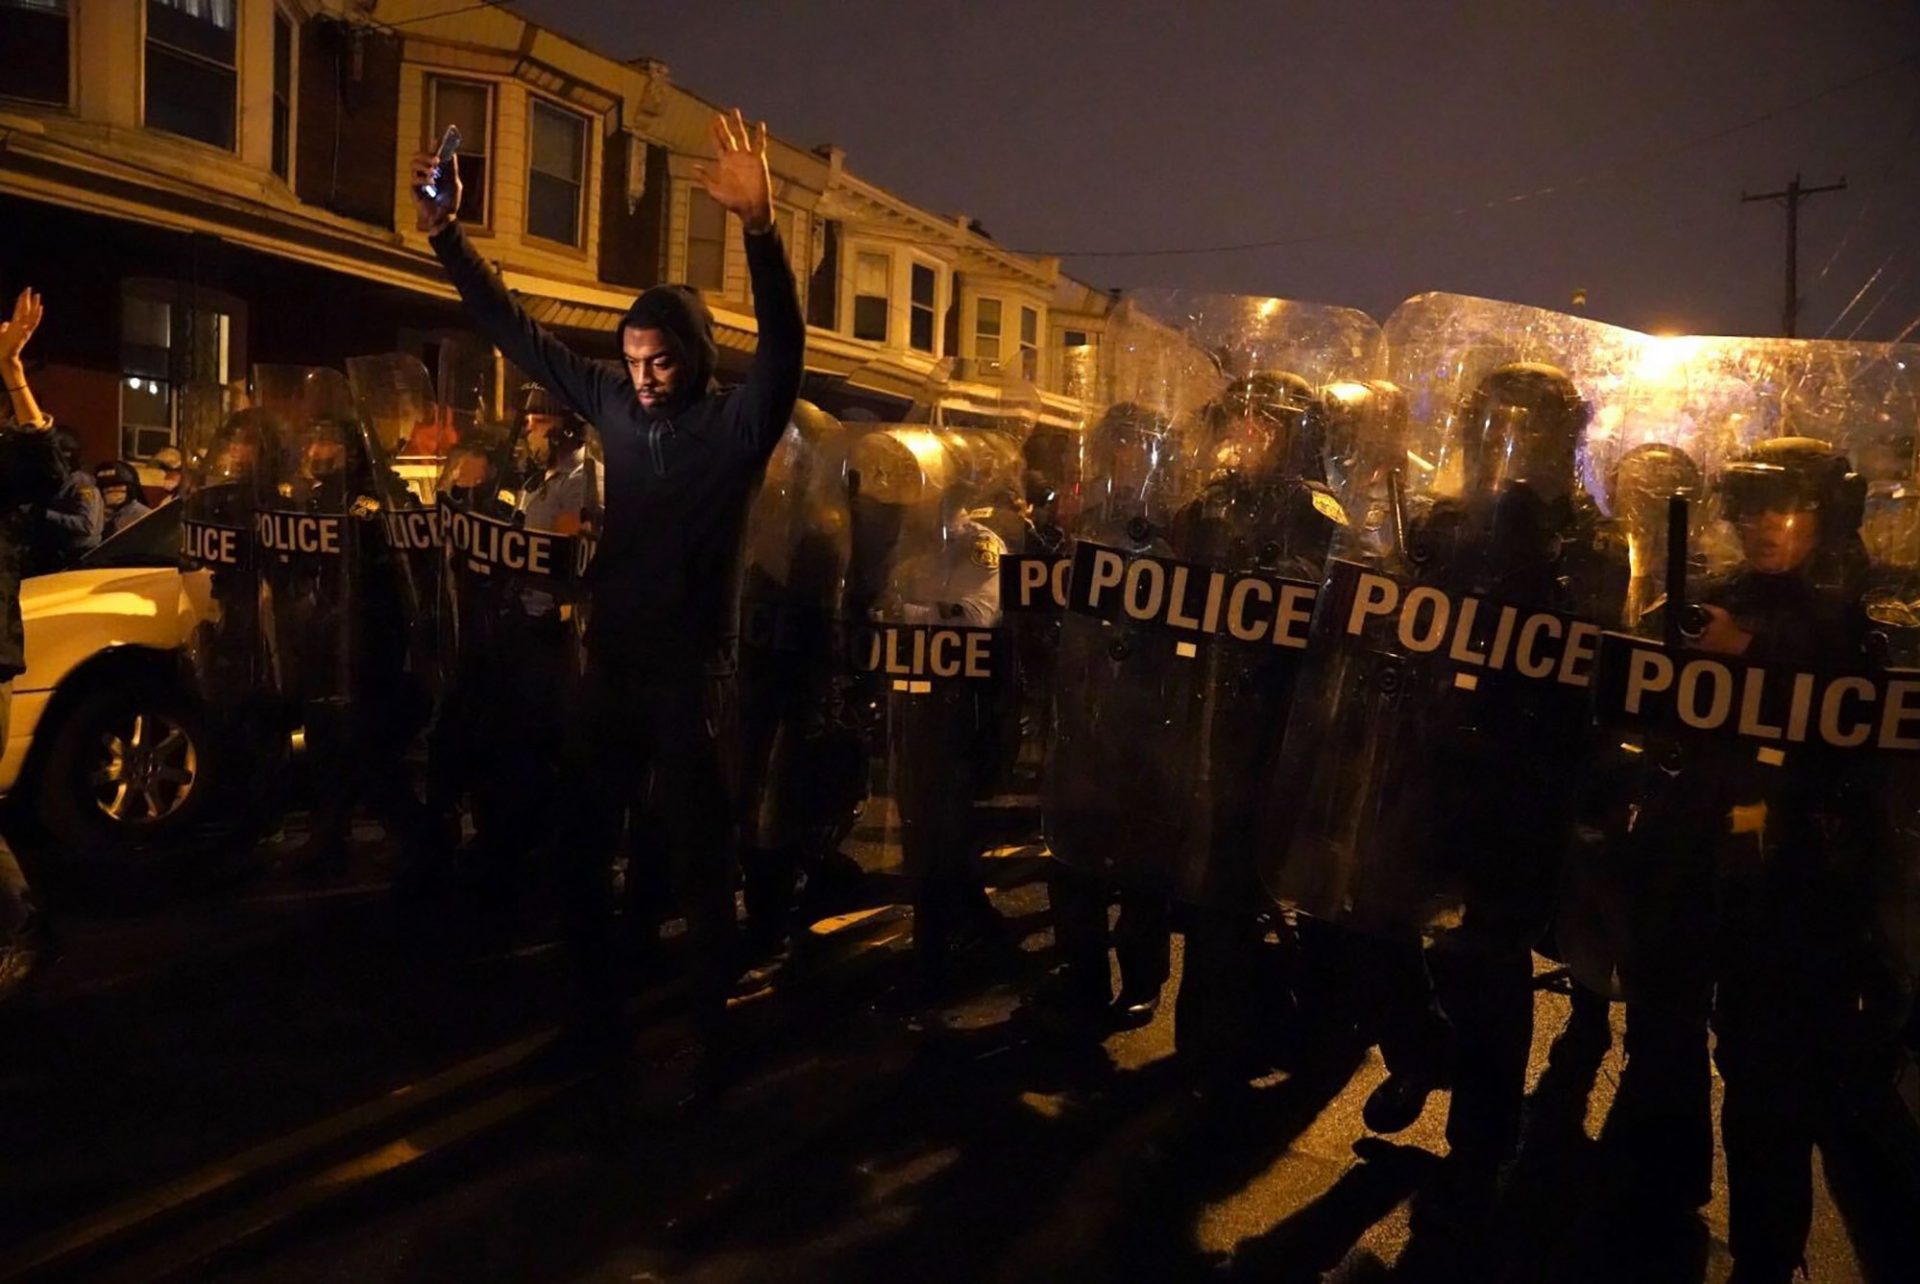 Philadelphia police shooting of Dark man sparks unrest